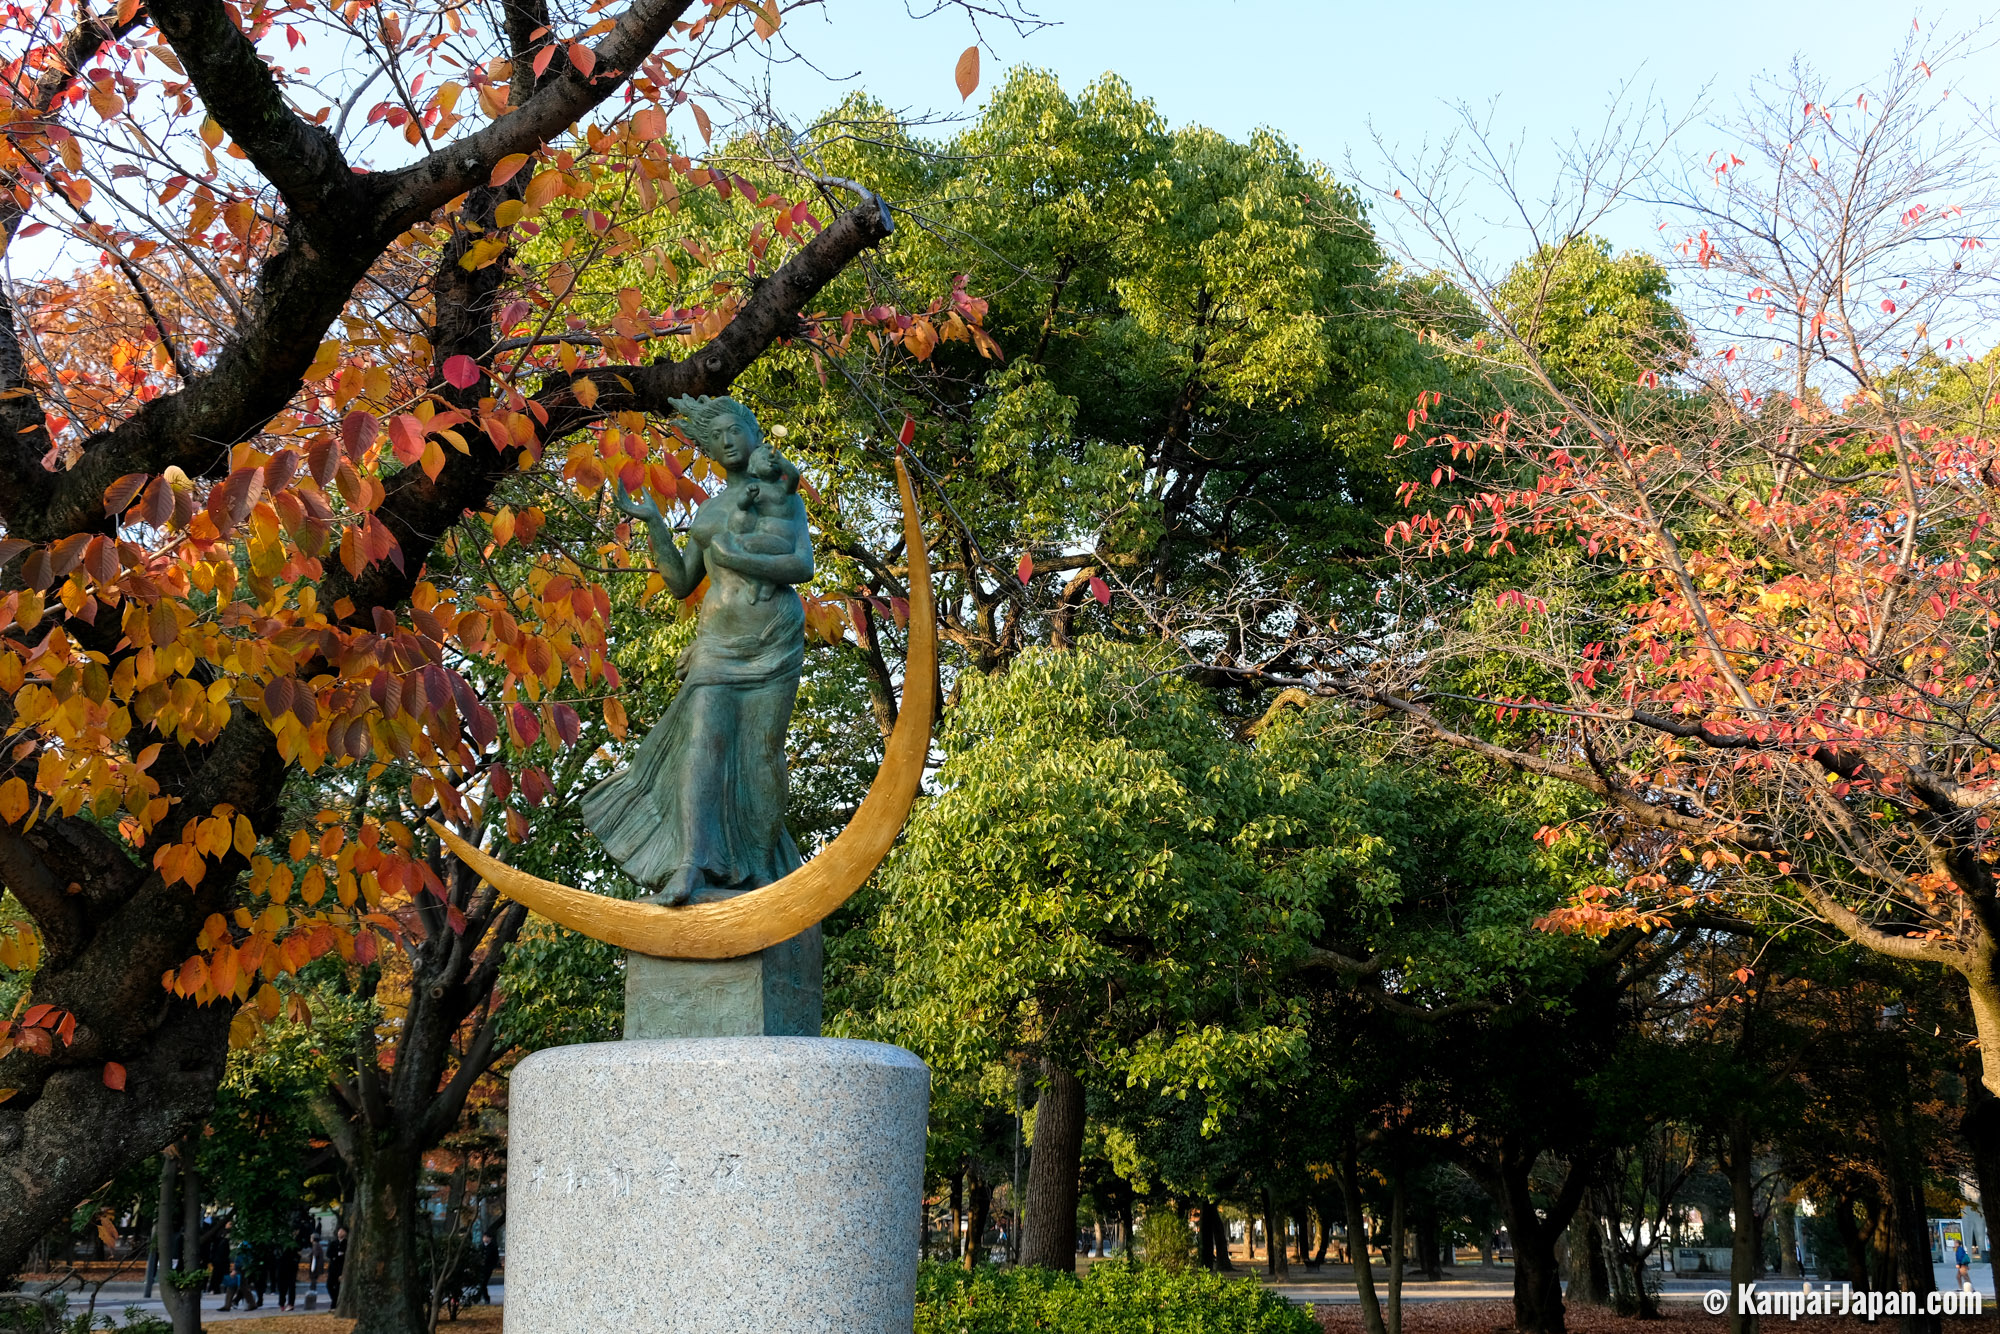 Hiroshima Peace Memorial Park - The memorial garden of History